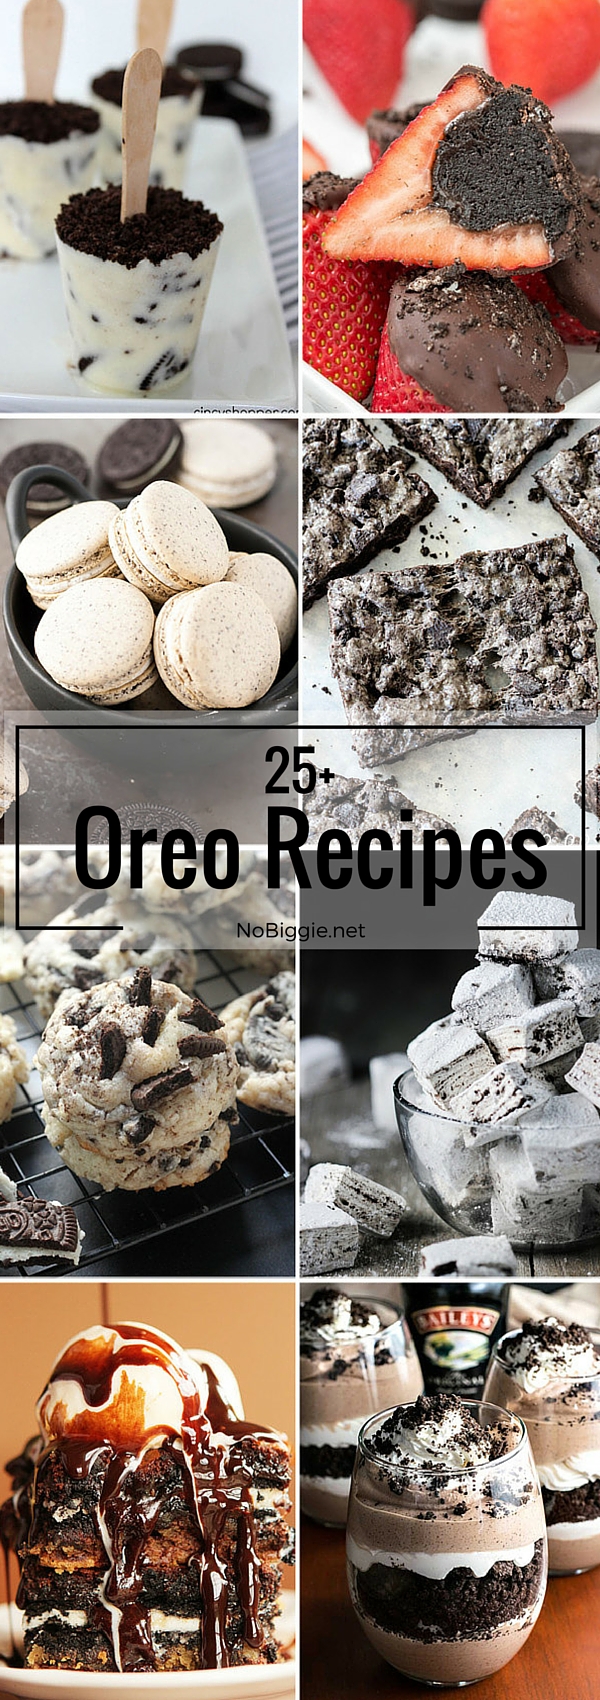 25+ Oreo Recipes | NoBiggie.net